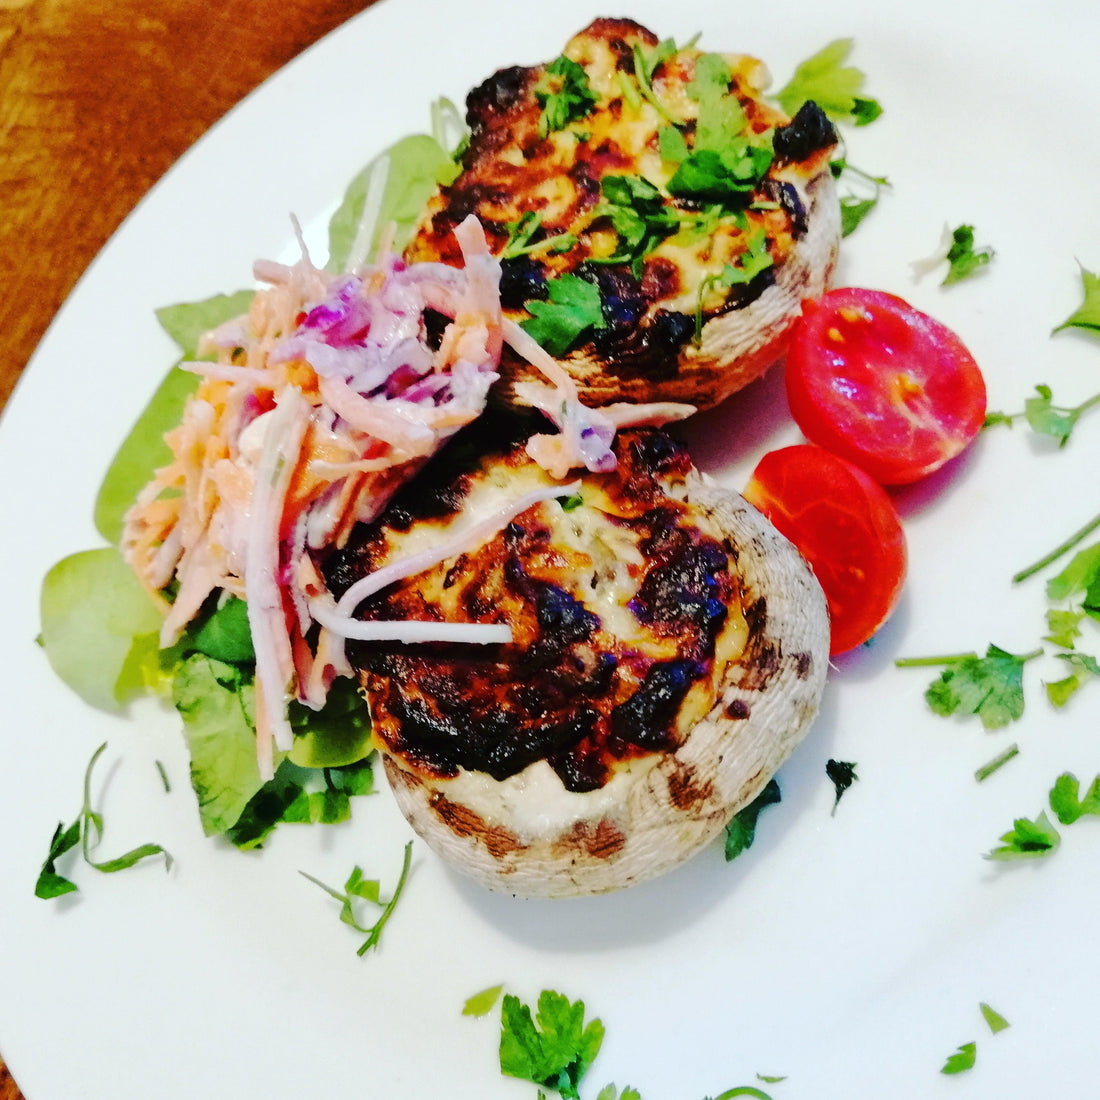 Stuffed mushrooms with salad easy recipe won't break the bank - Fitness Health 